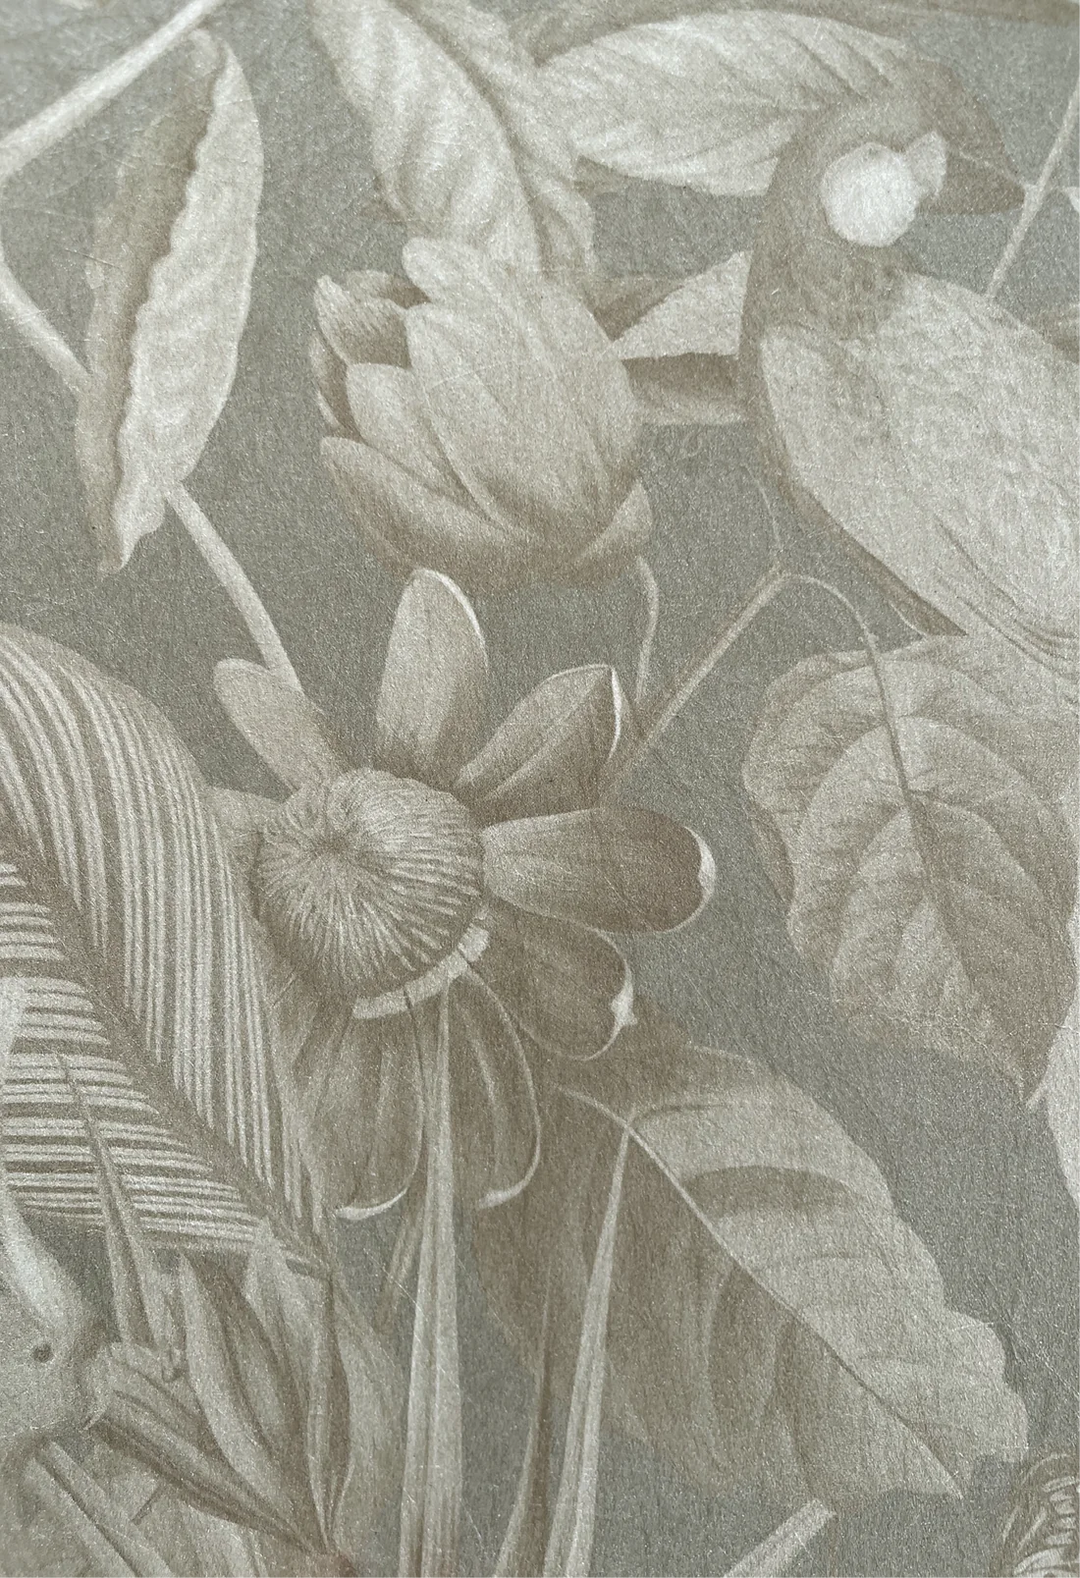 Deus-ex-gardenia-Passiflora-wallpaper-Ammonite-pearly-cream-background-columbian-tropical-rainforest-feeling-birds-butterflies-ferns-jungle-hand-illustrated-print-pattern